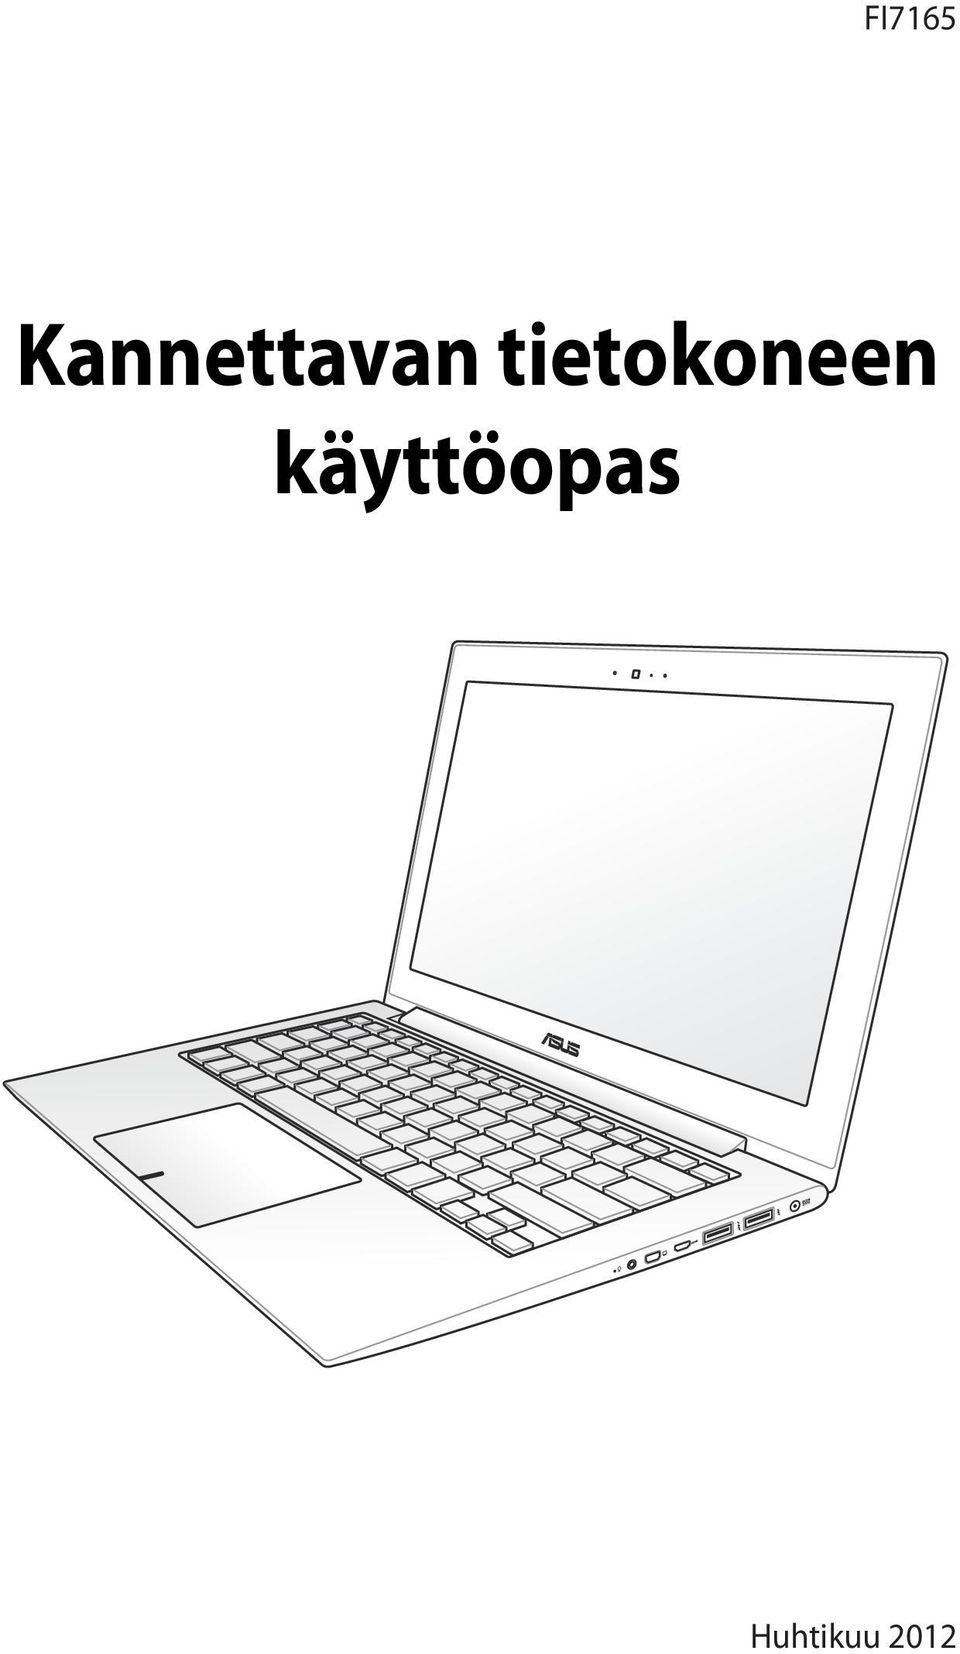 tietokoneen